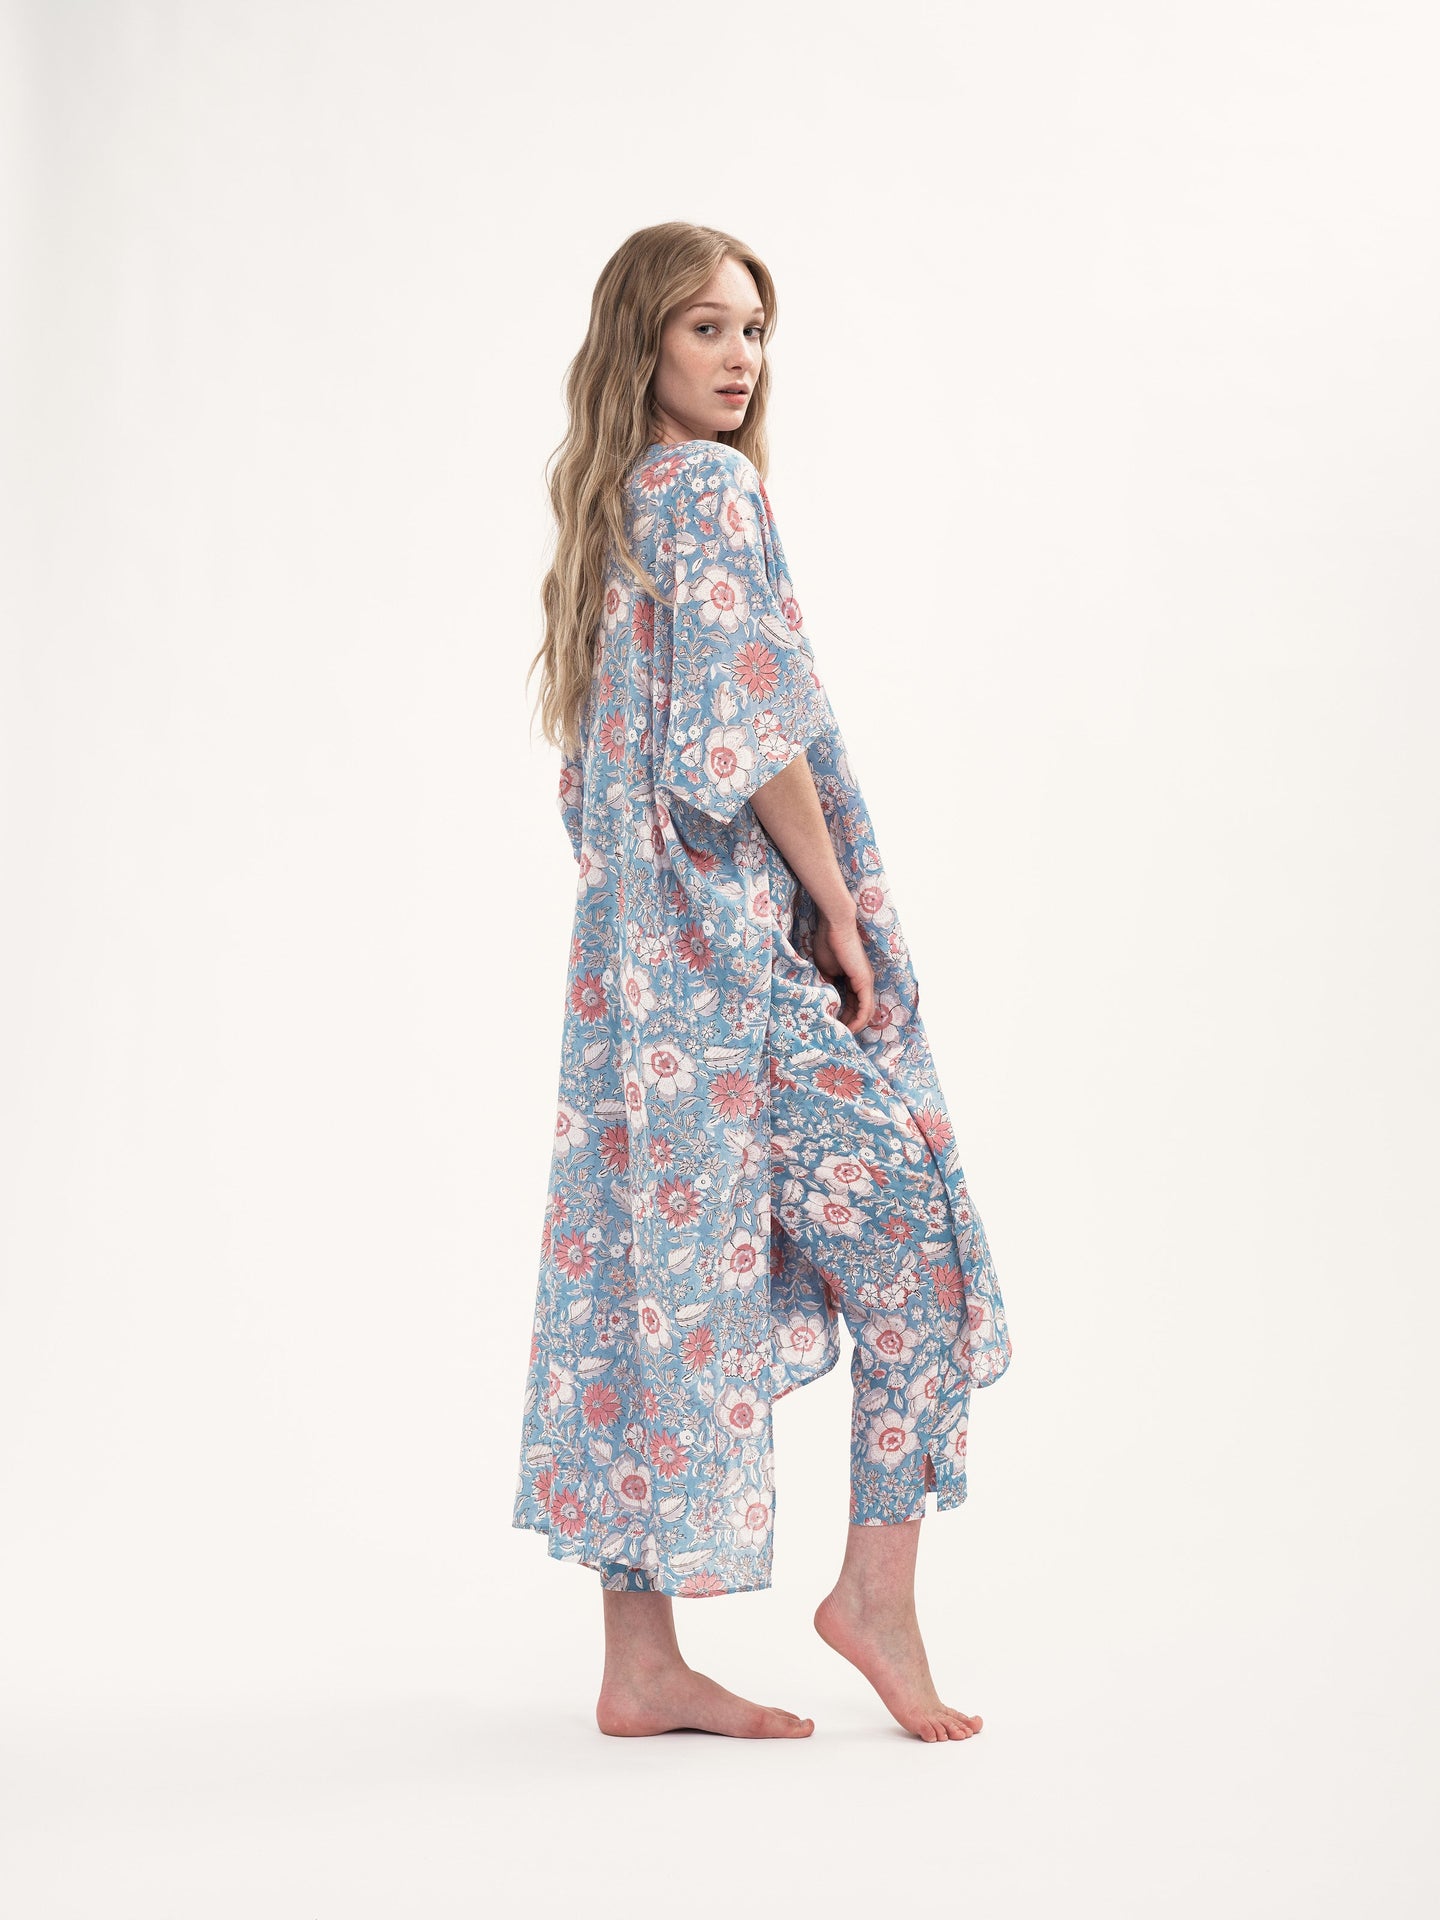 Long Kimono - Spring Maelu Designs Colette 